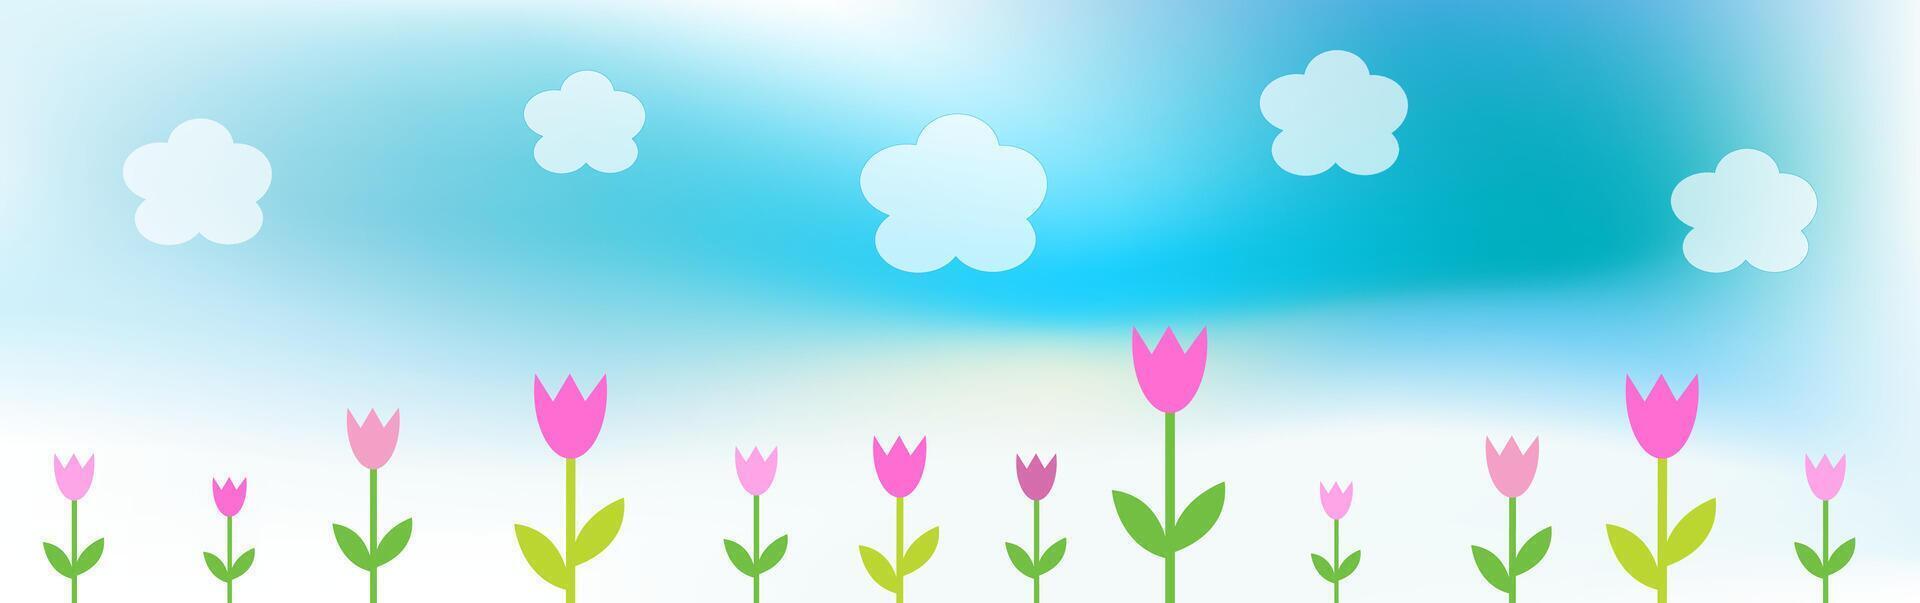 branco nuvens, céu, tulipas, rede bandeira vetor